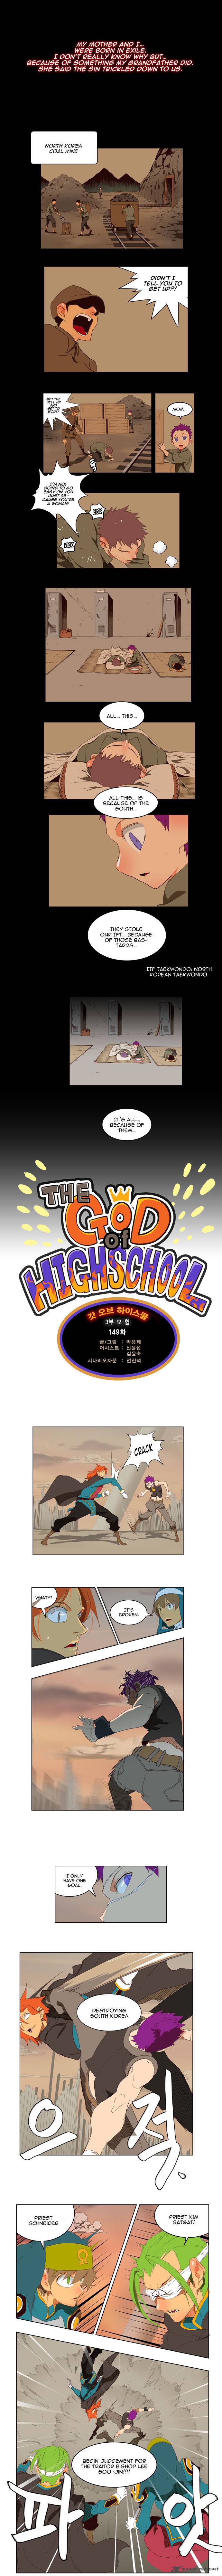 The God Of High School 149 2